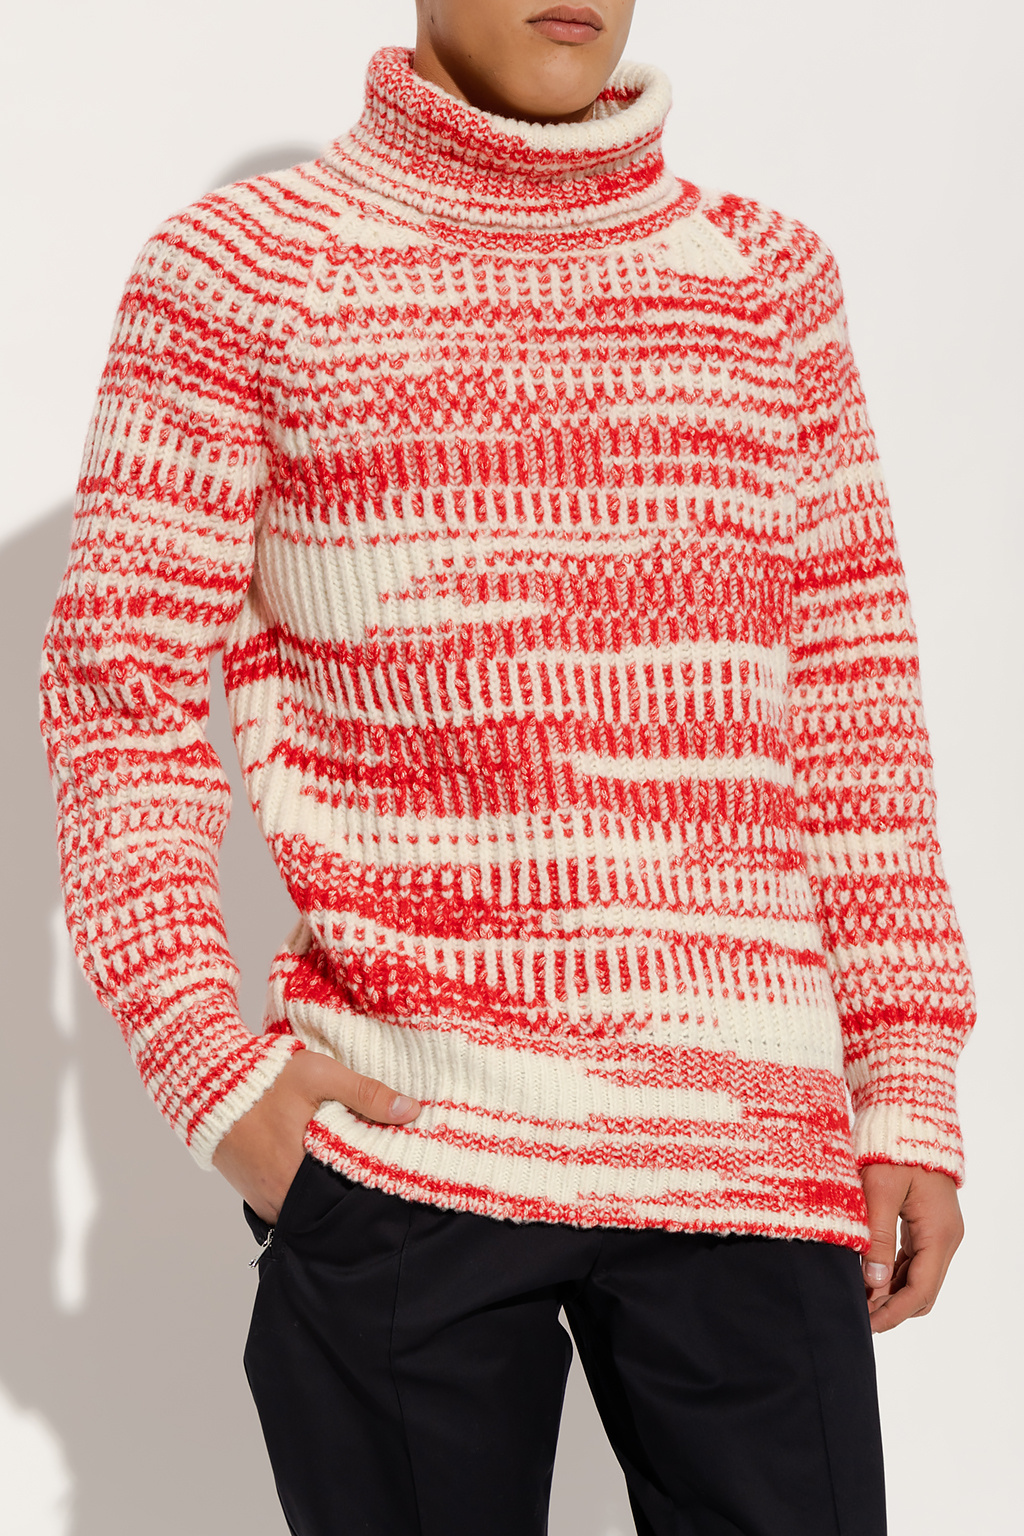 Salvatore Ferragamo Patterned turtleneck sweater